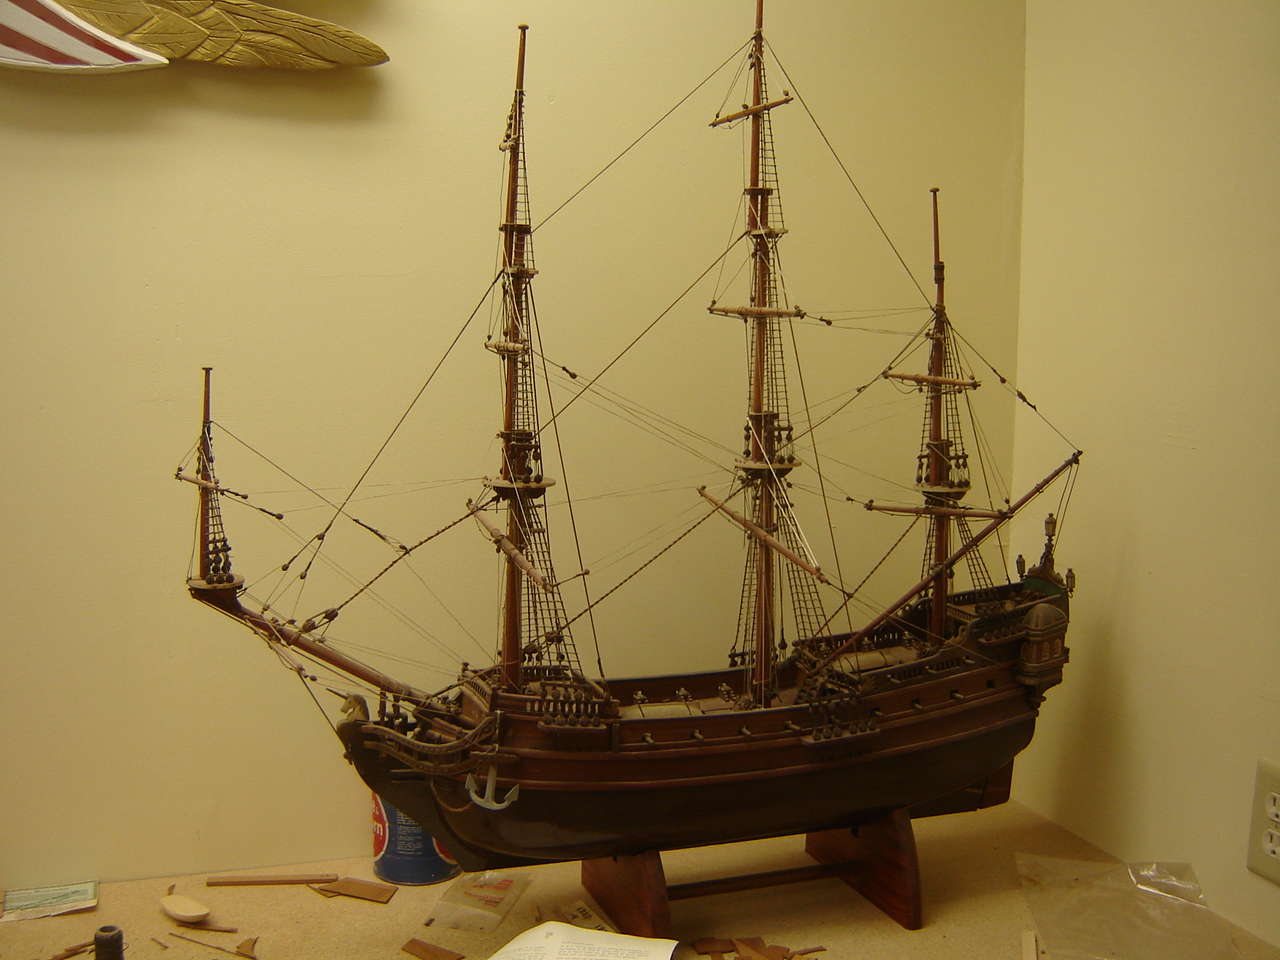 A ship model